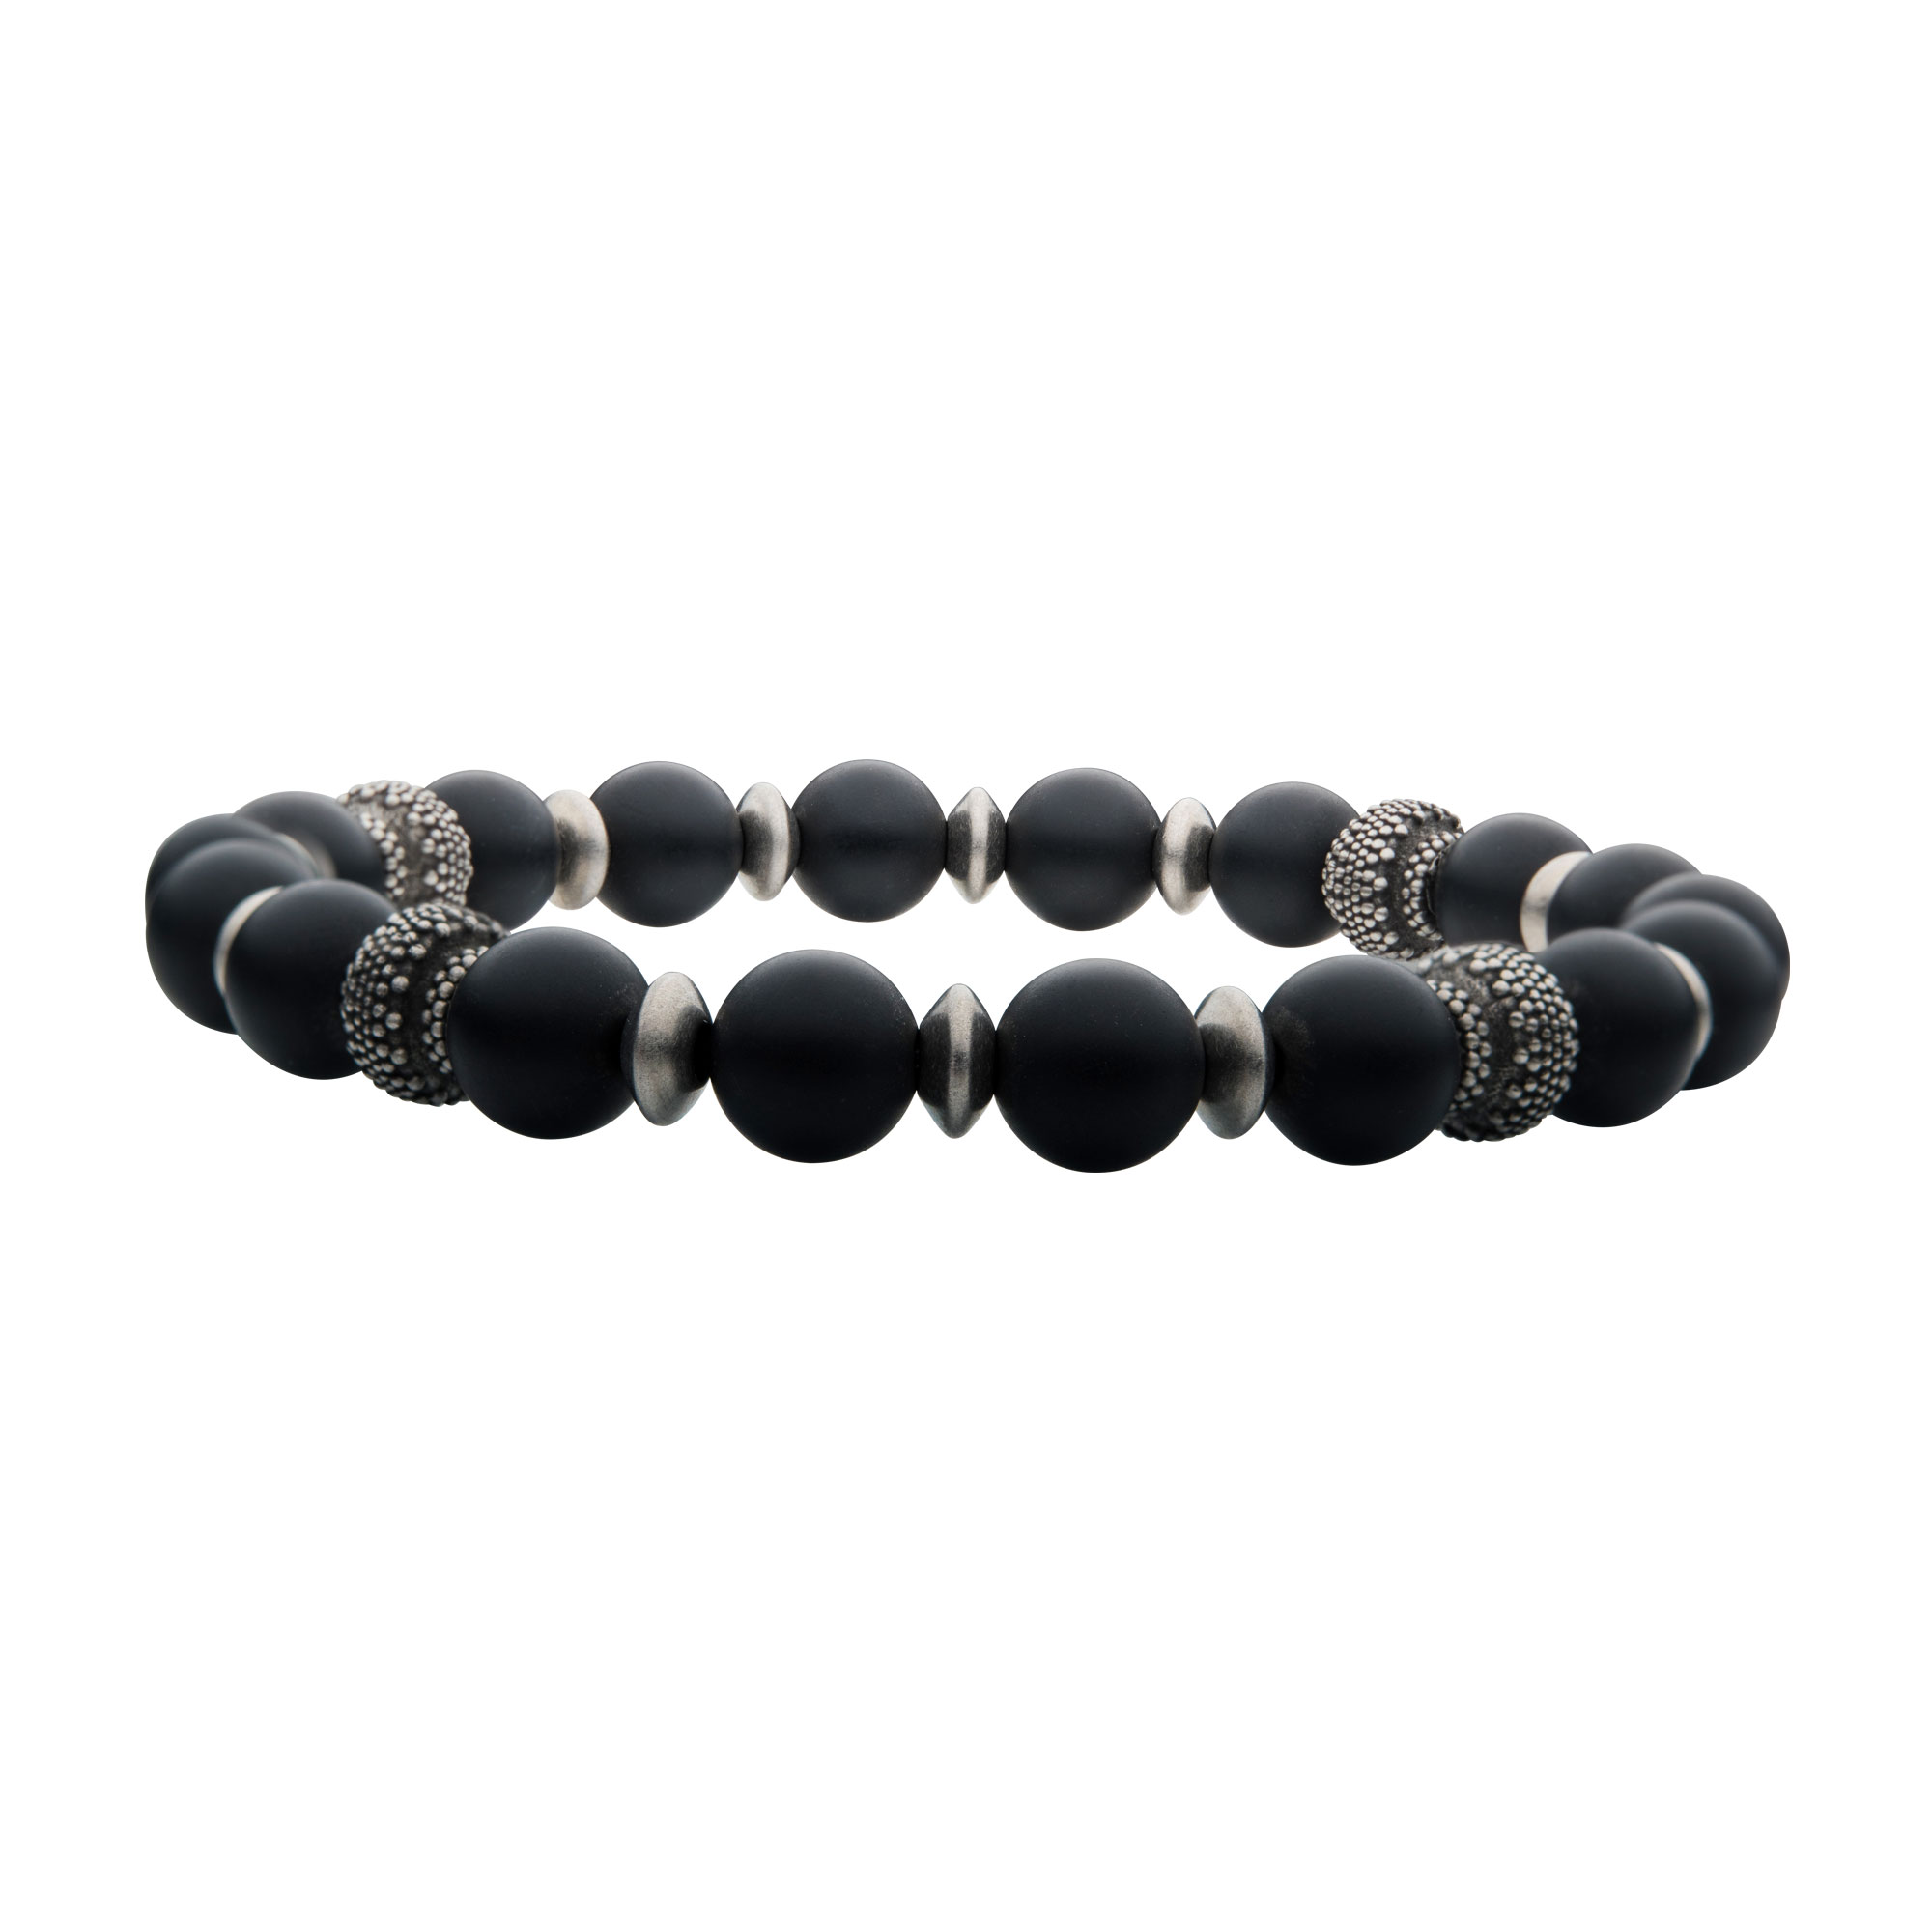 Matte Black Agate Stones with Black Oxidized Beads Bracelet Lewis Jewelers, Inc. Ansonia, CT